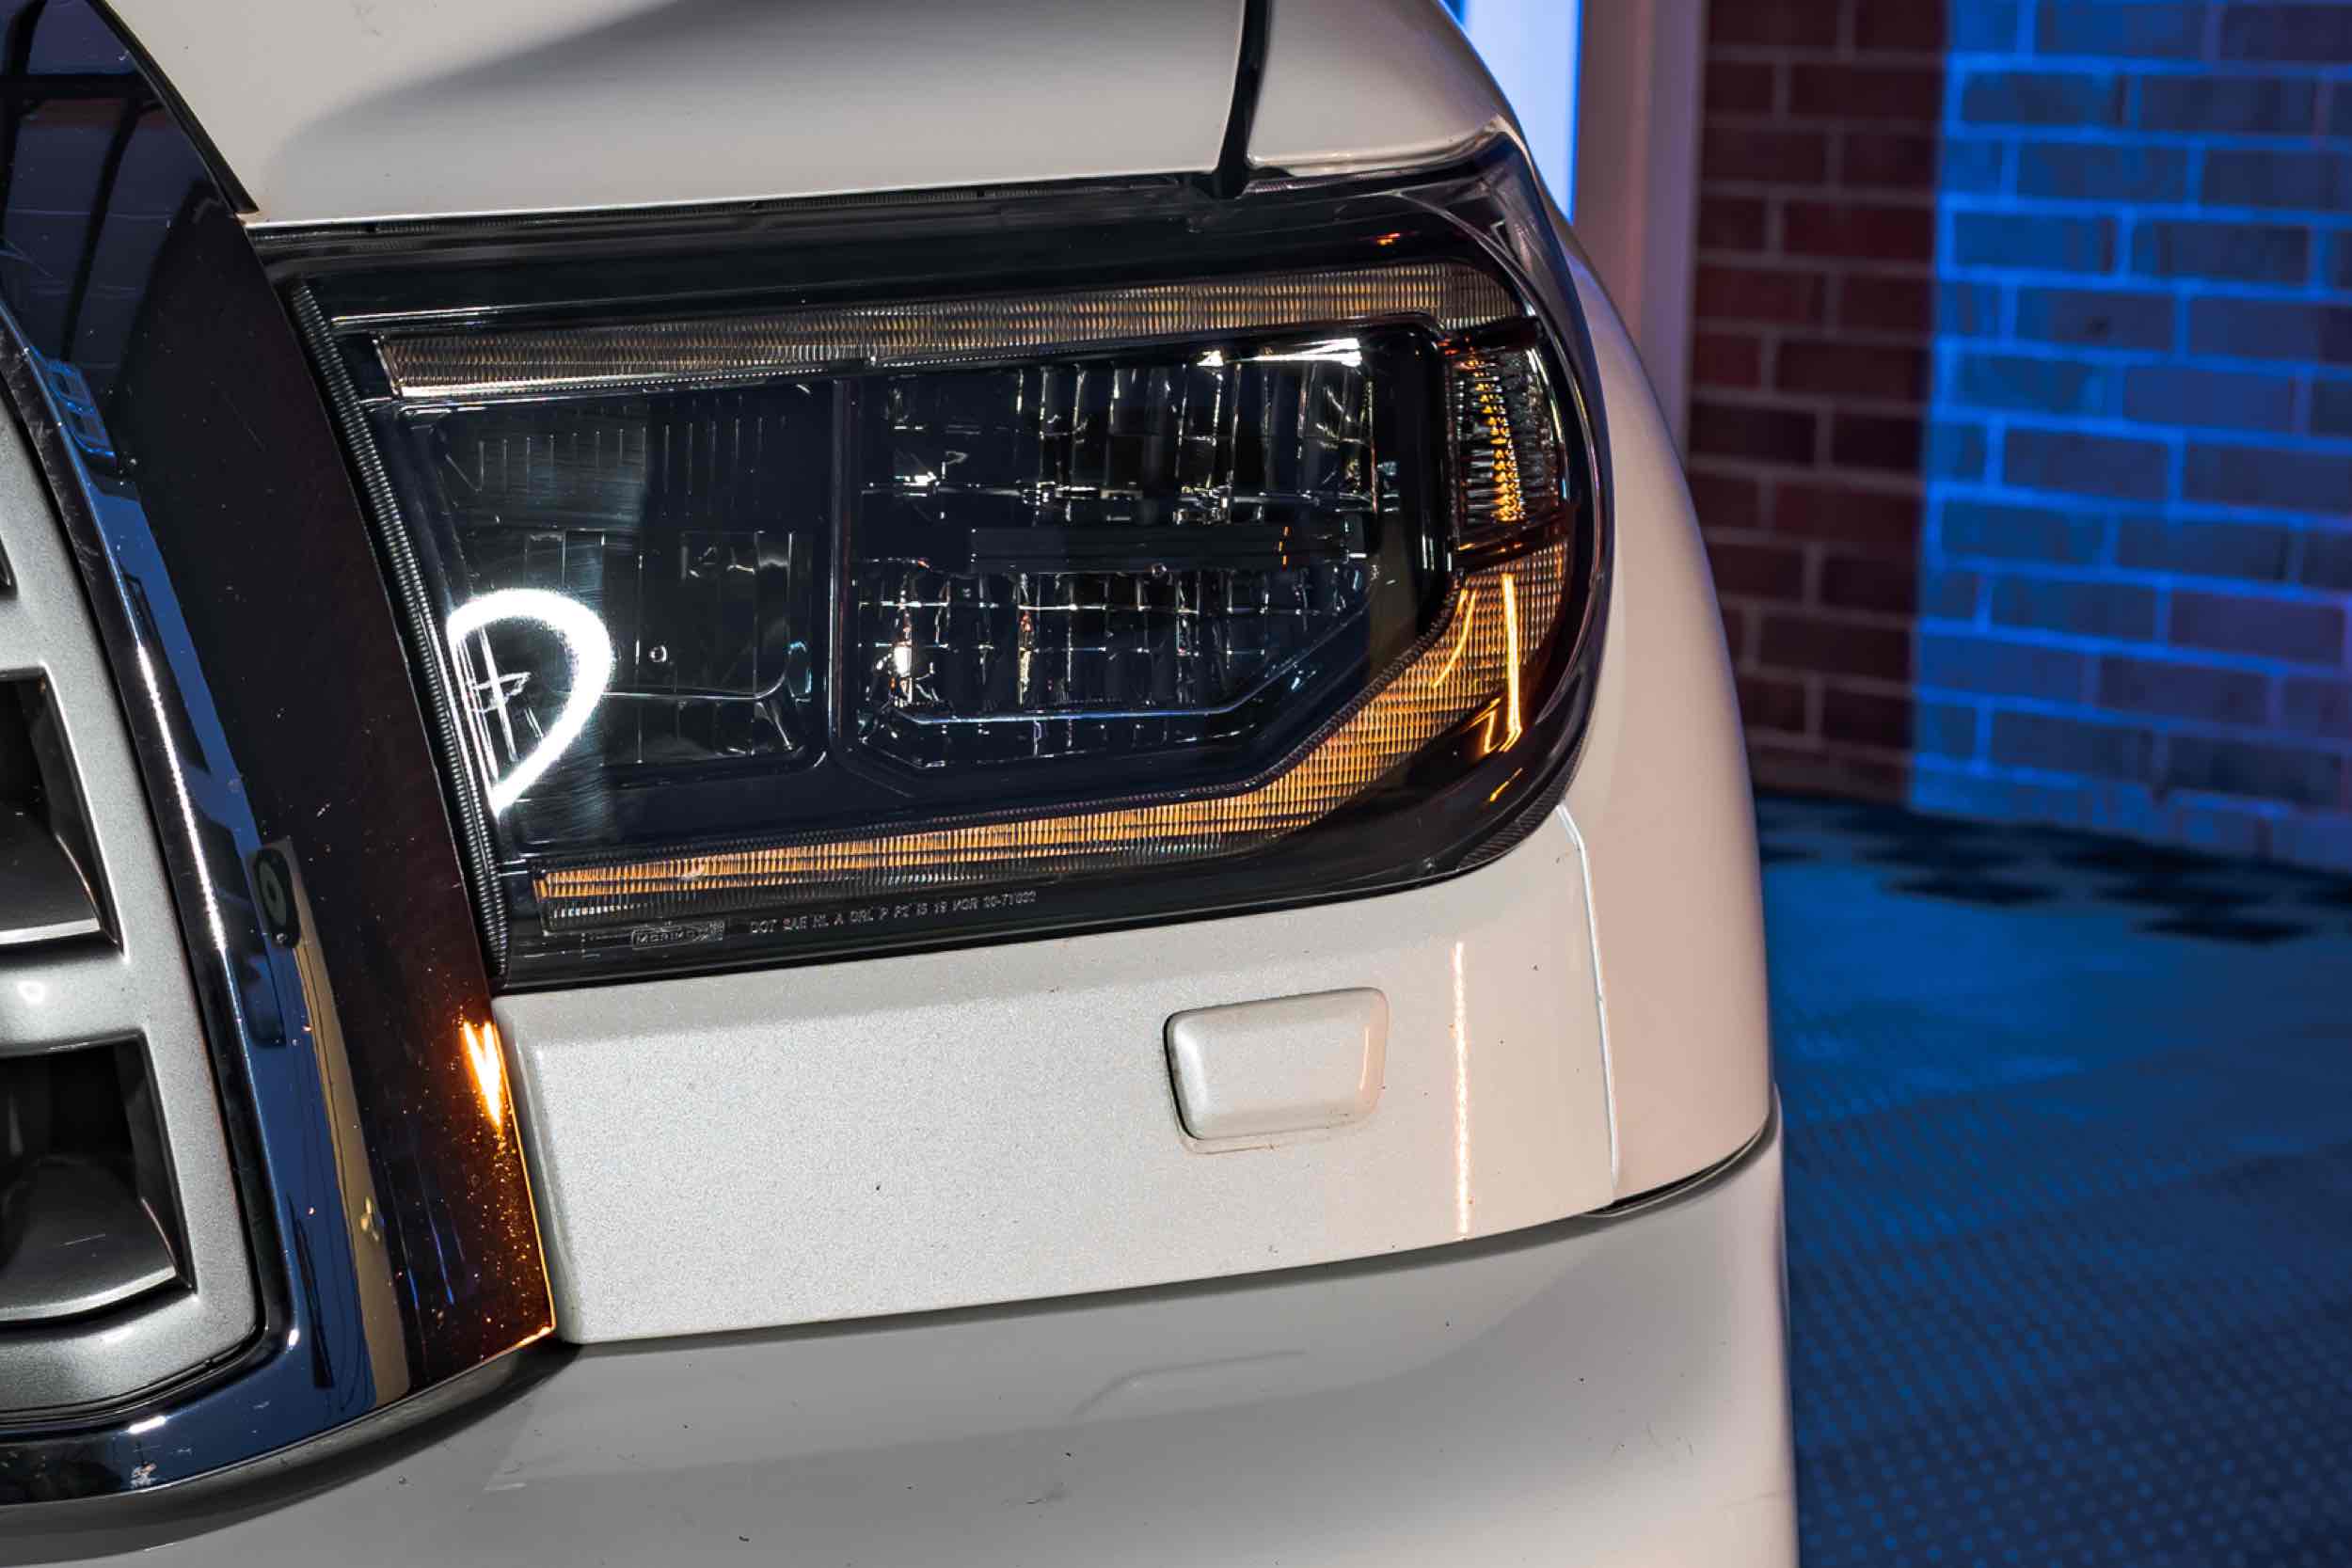 Morimoto XB LED Headlights: Toyota Tundra (07-13) (Pair / ASM) (Gen 2) LF533-ASM